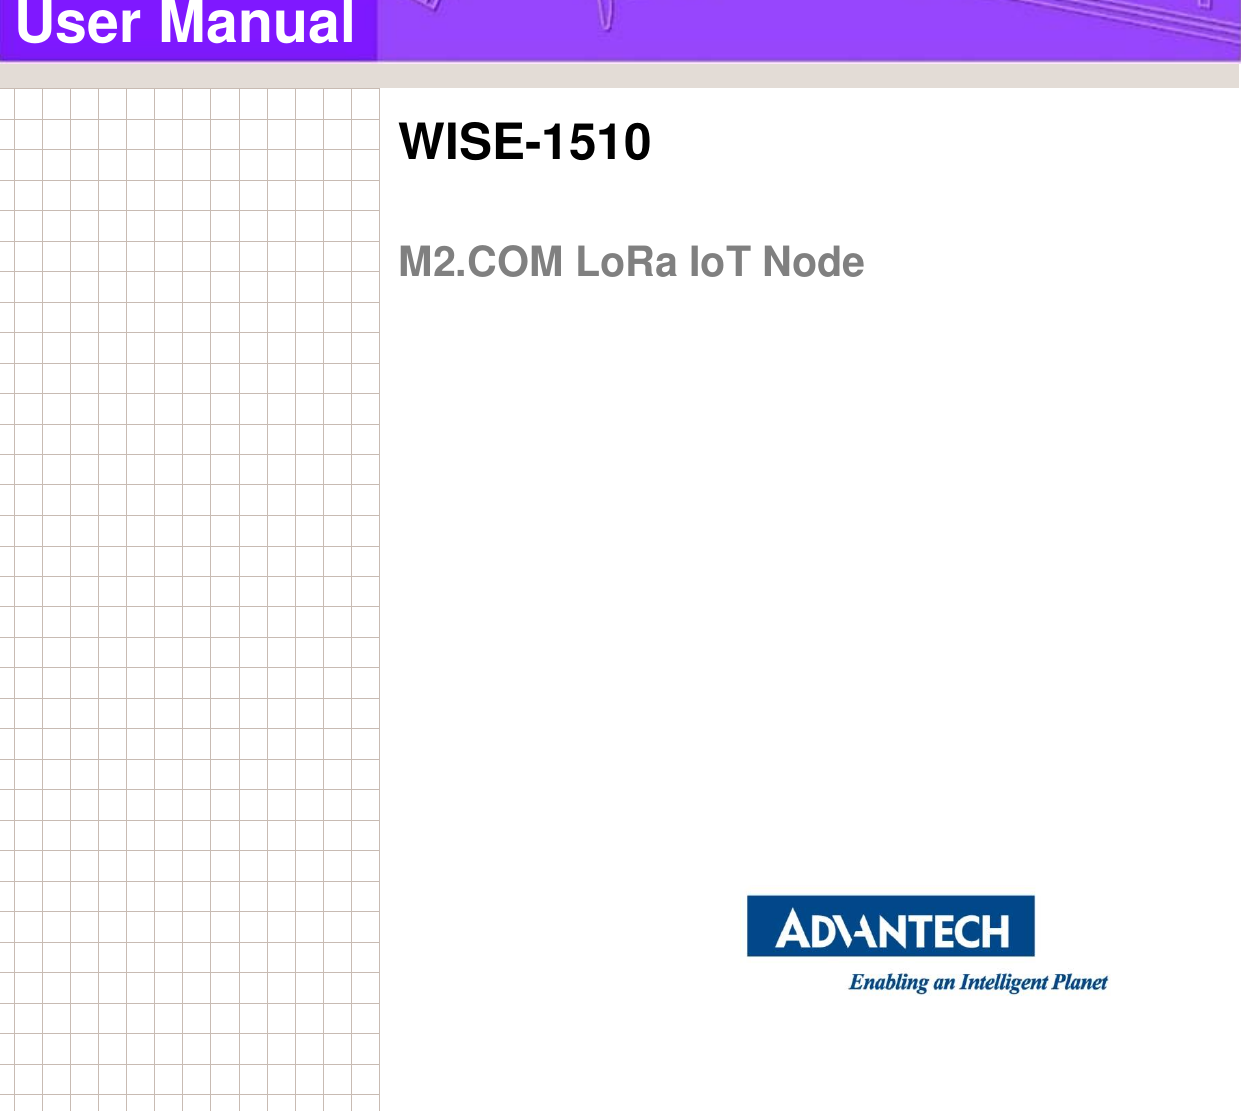                          User Manual  WISE-1510  M2.COM LoRa IoT Node                    